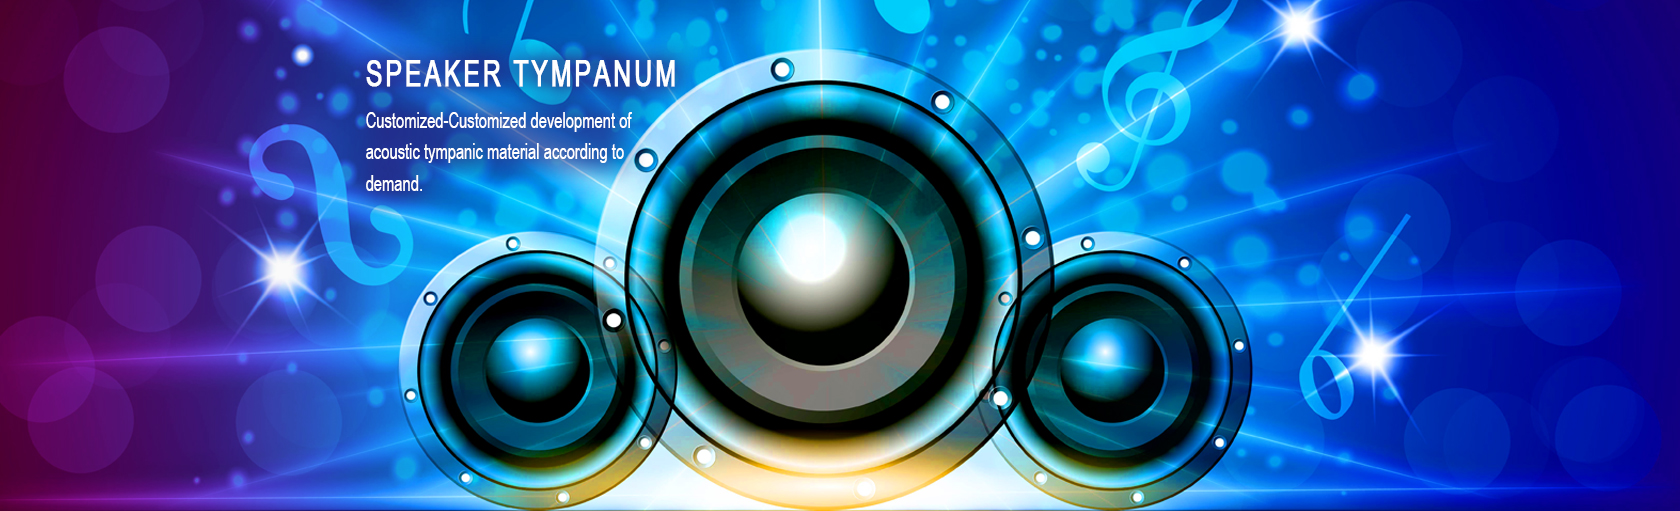 Speaker tympanum-Sound quality is amazing! 
NAN YA Glass fabric composite